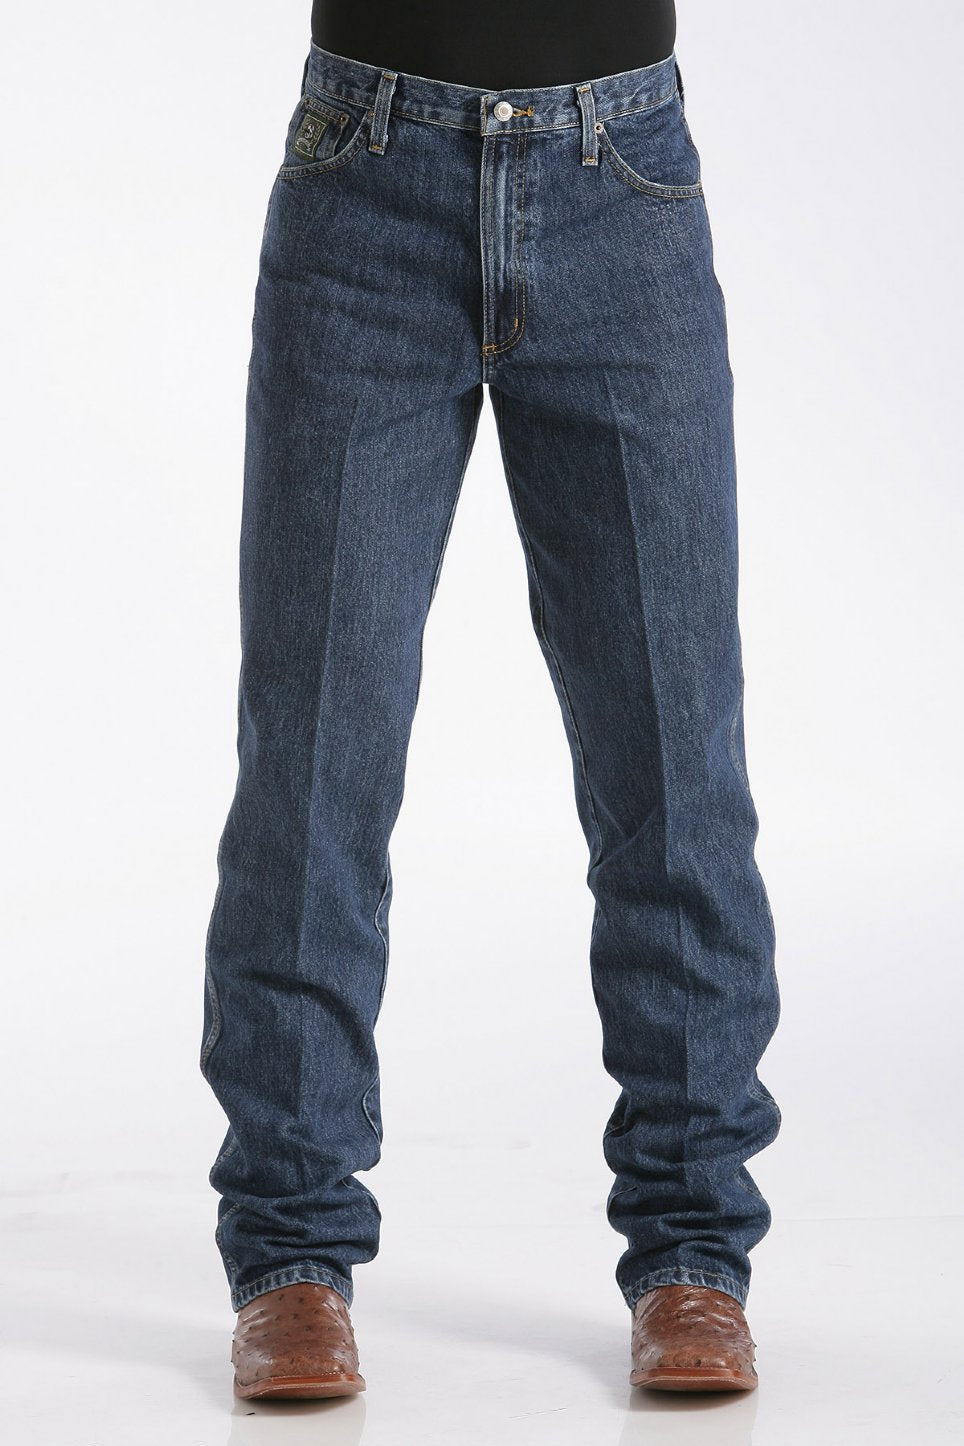 Cinch Mens Green Label Relaxed Fit Jeans 32 Inch Leg (Dark Stonewash)